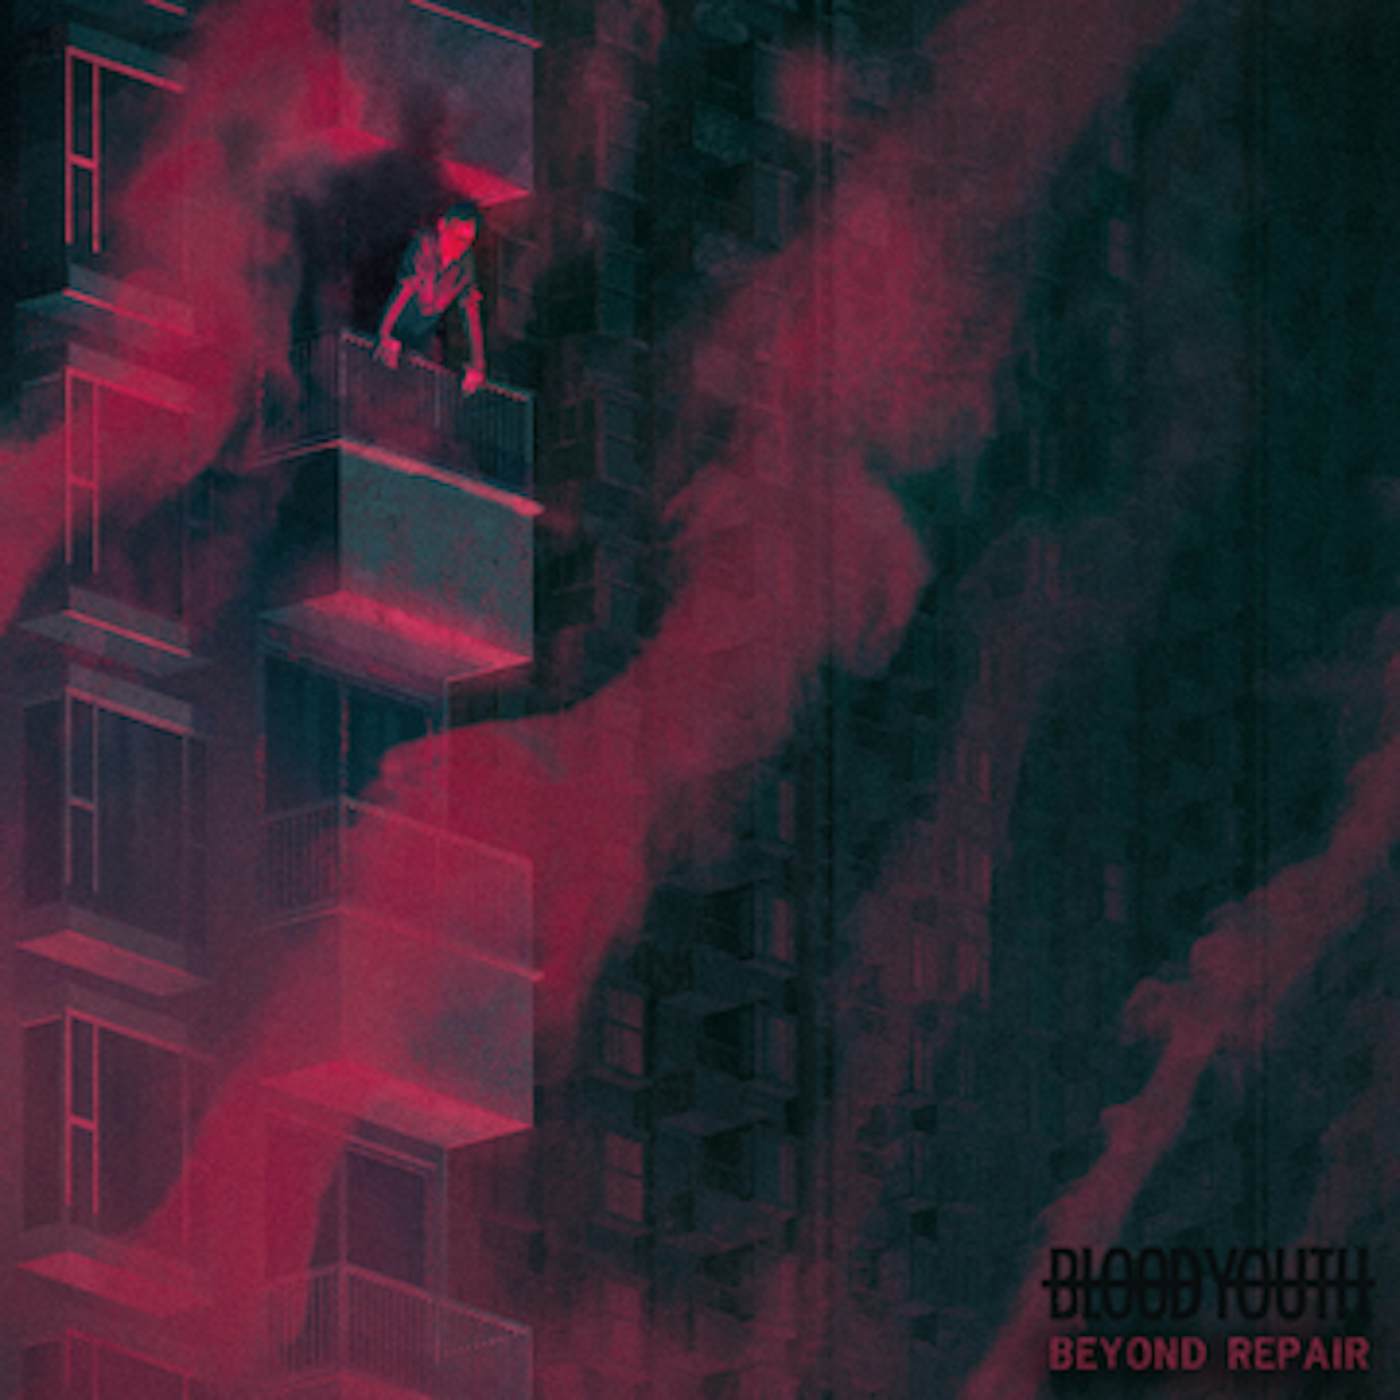 Blood Youth Beyond repair Vinyl Record